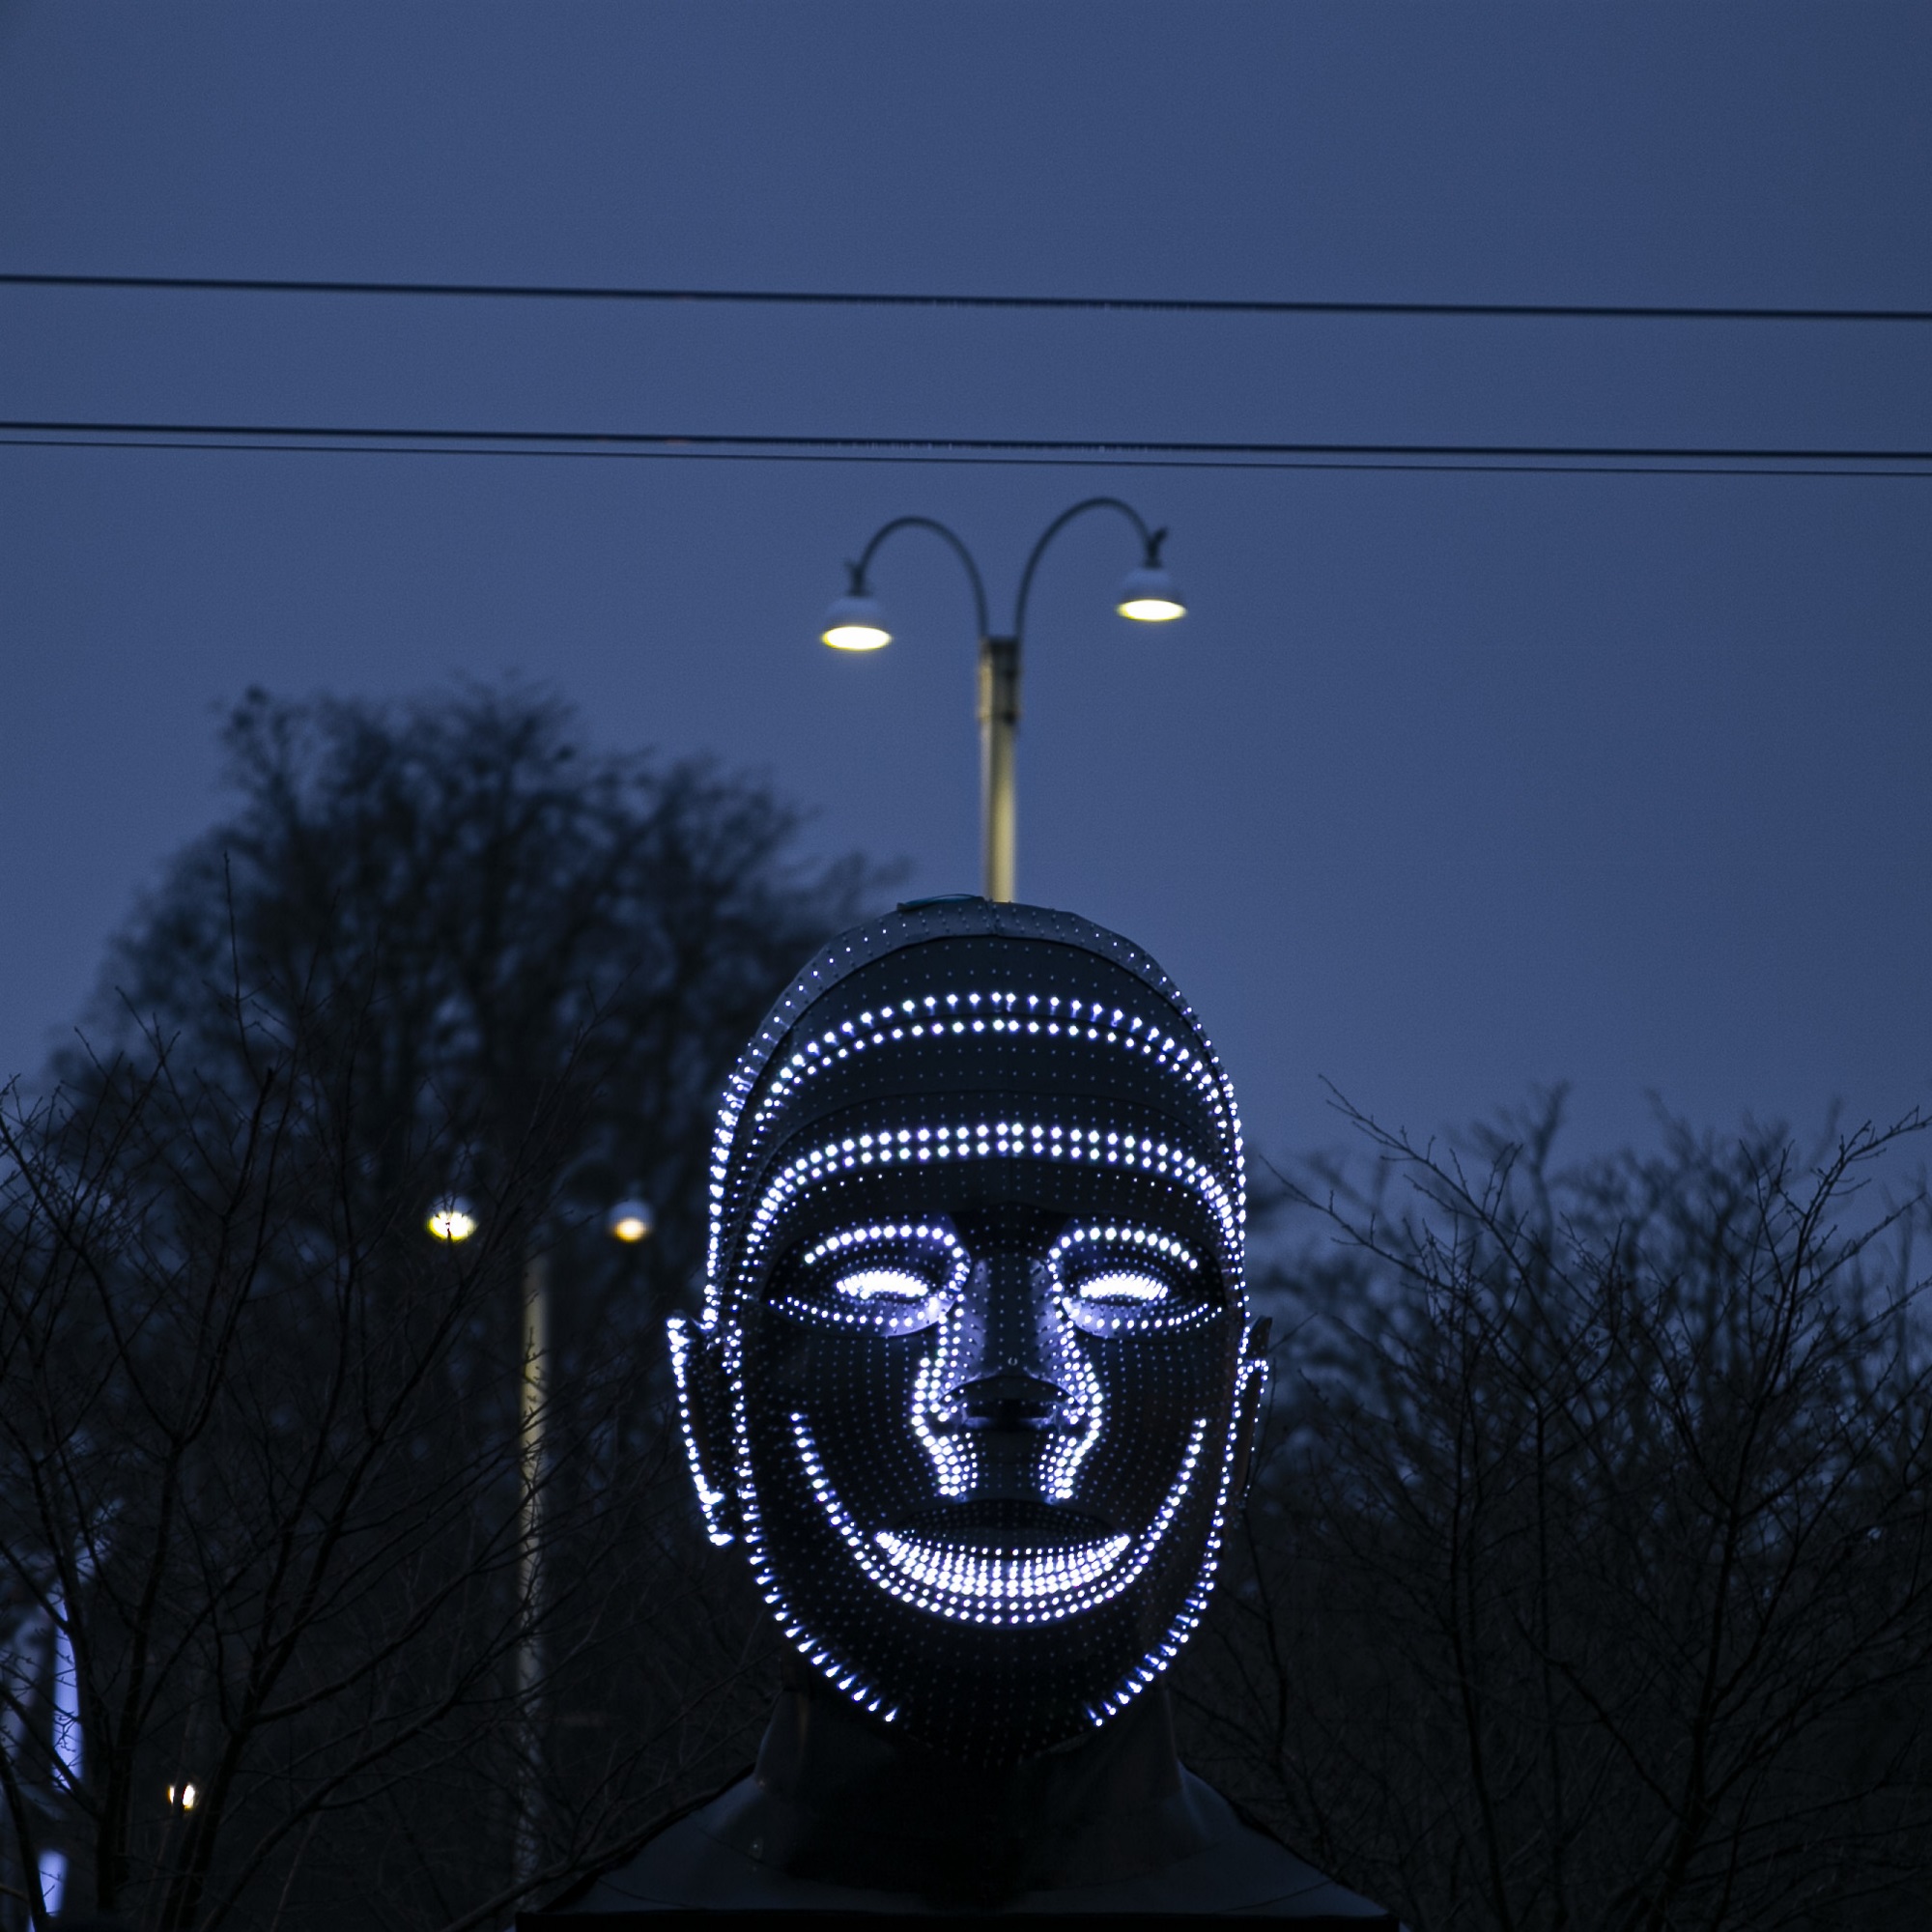 Art: Talking Heads, Creator: Viktor Vicsek,/ photo by: Mitra